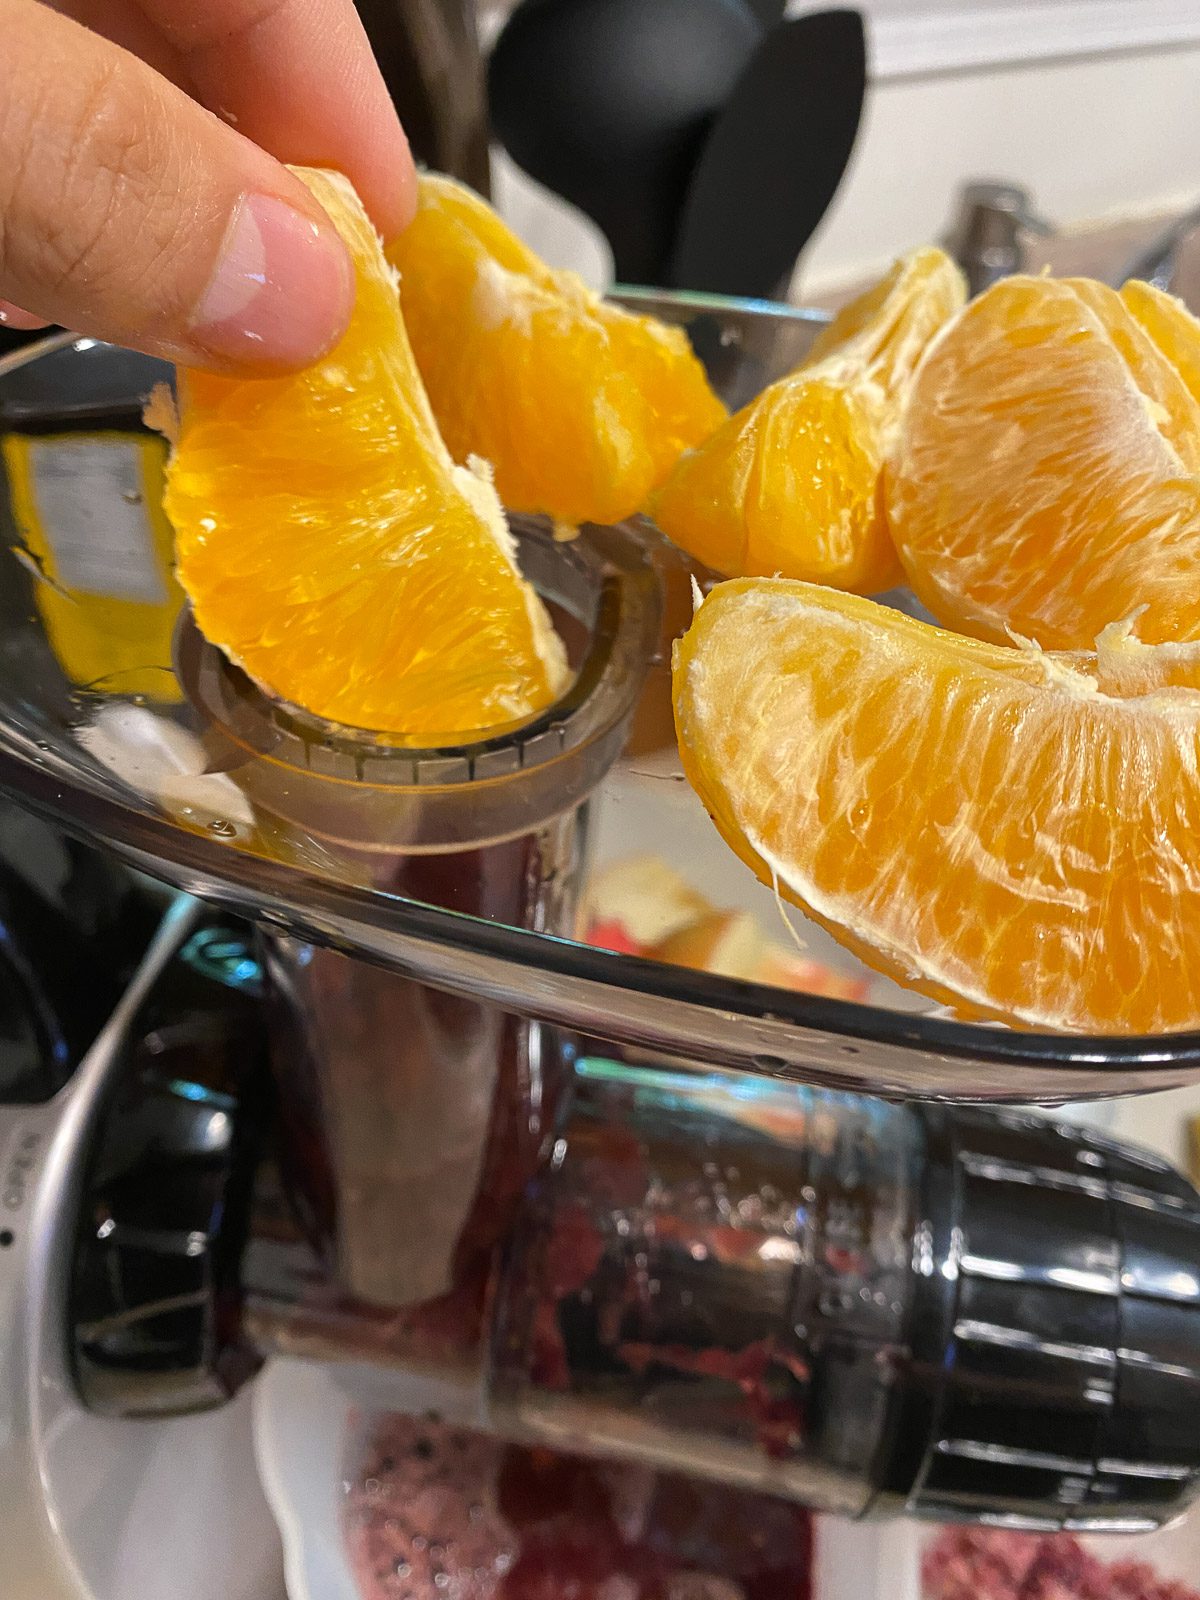 process shot of putting orange into a juicer